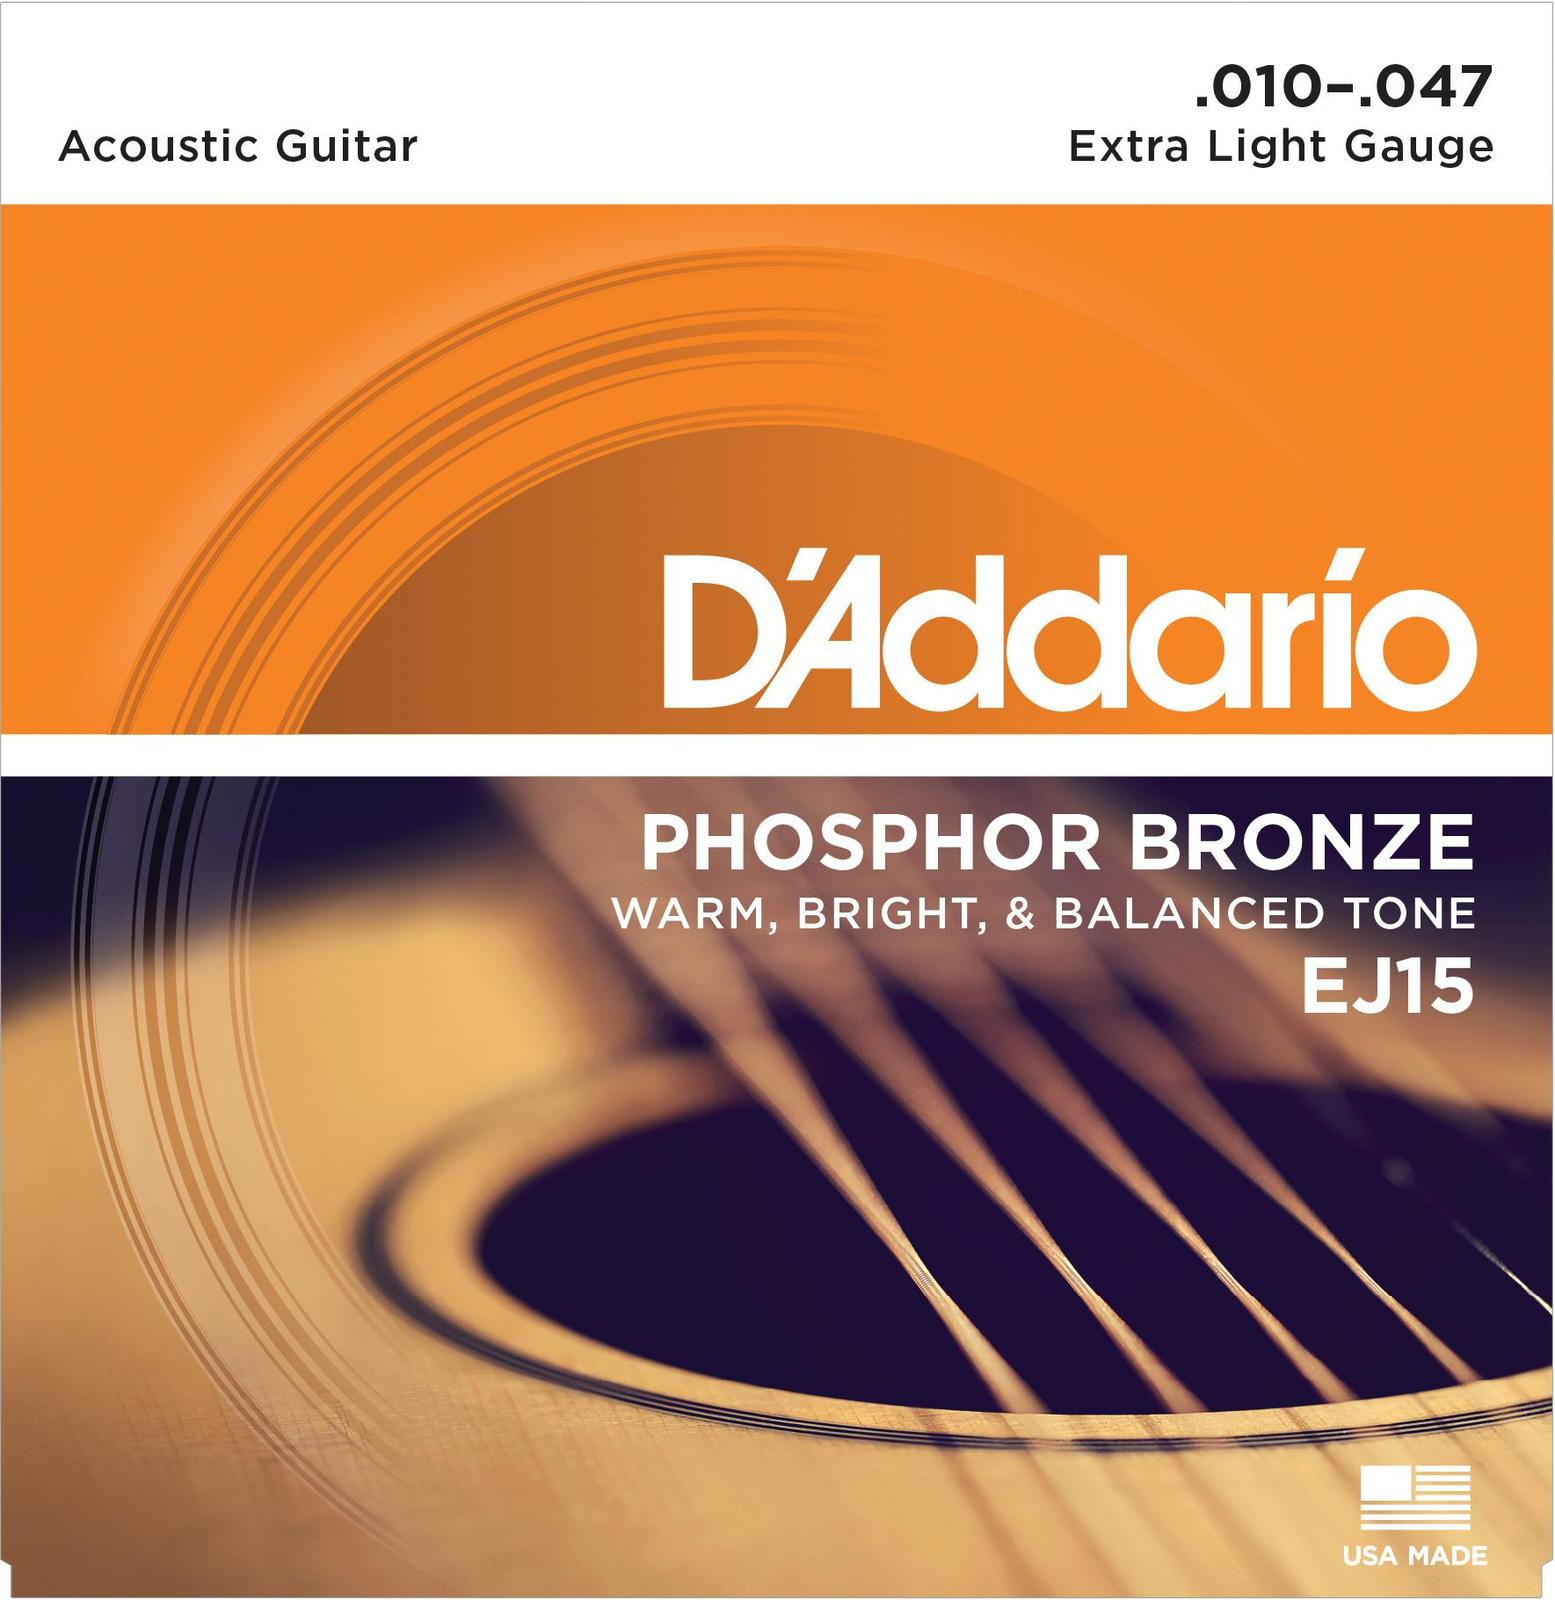 D'Addario EJ15 10-47 Accoustic Guitar Strings